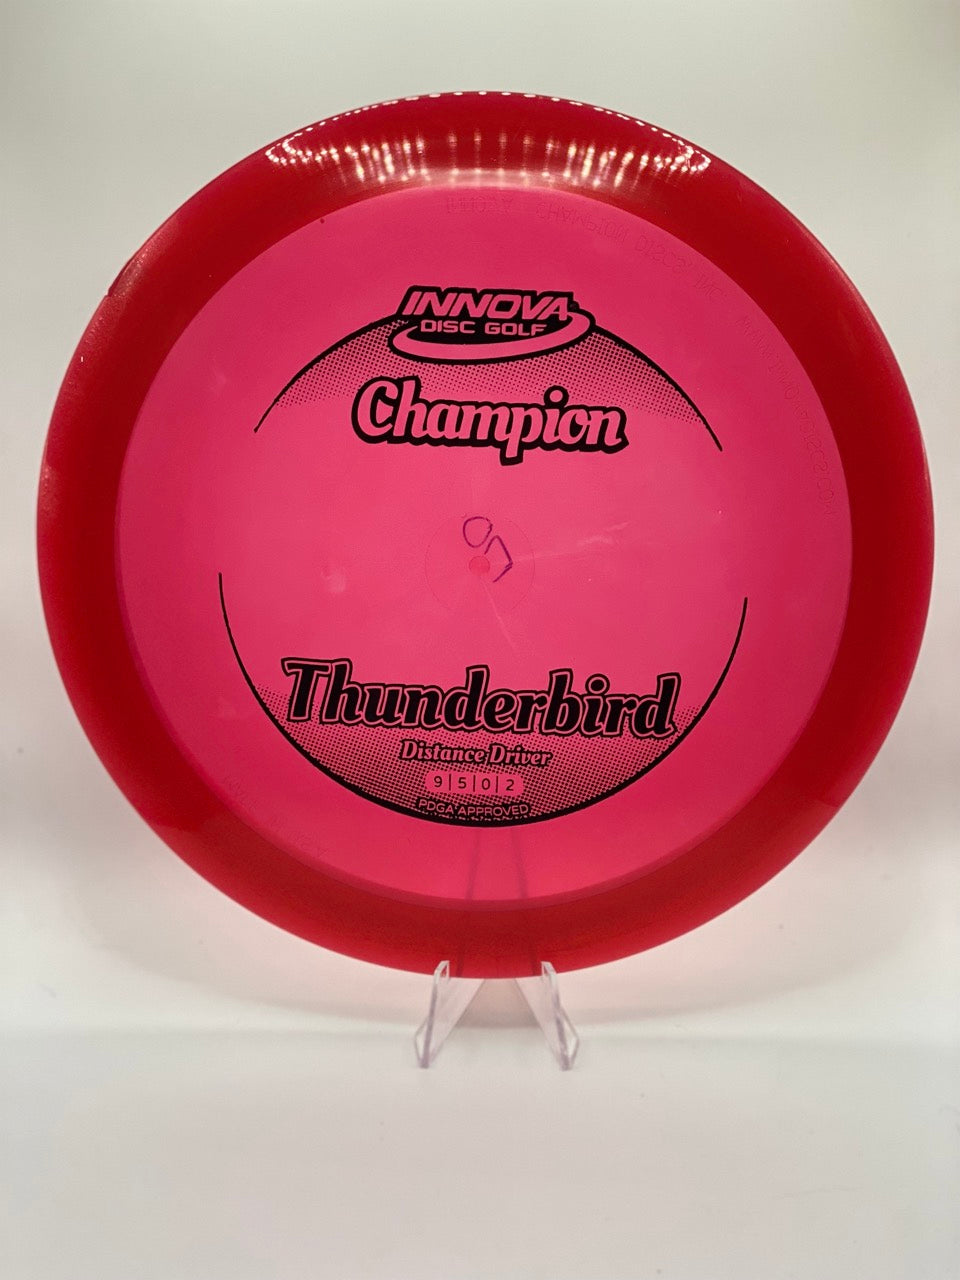 Innova Champion Thunderbird - Fairway Driver